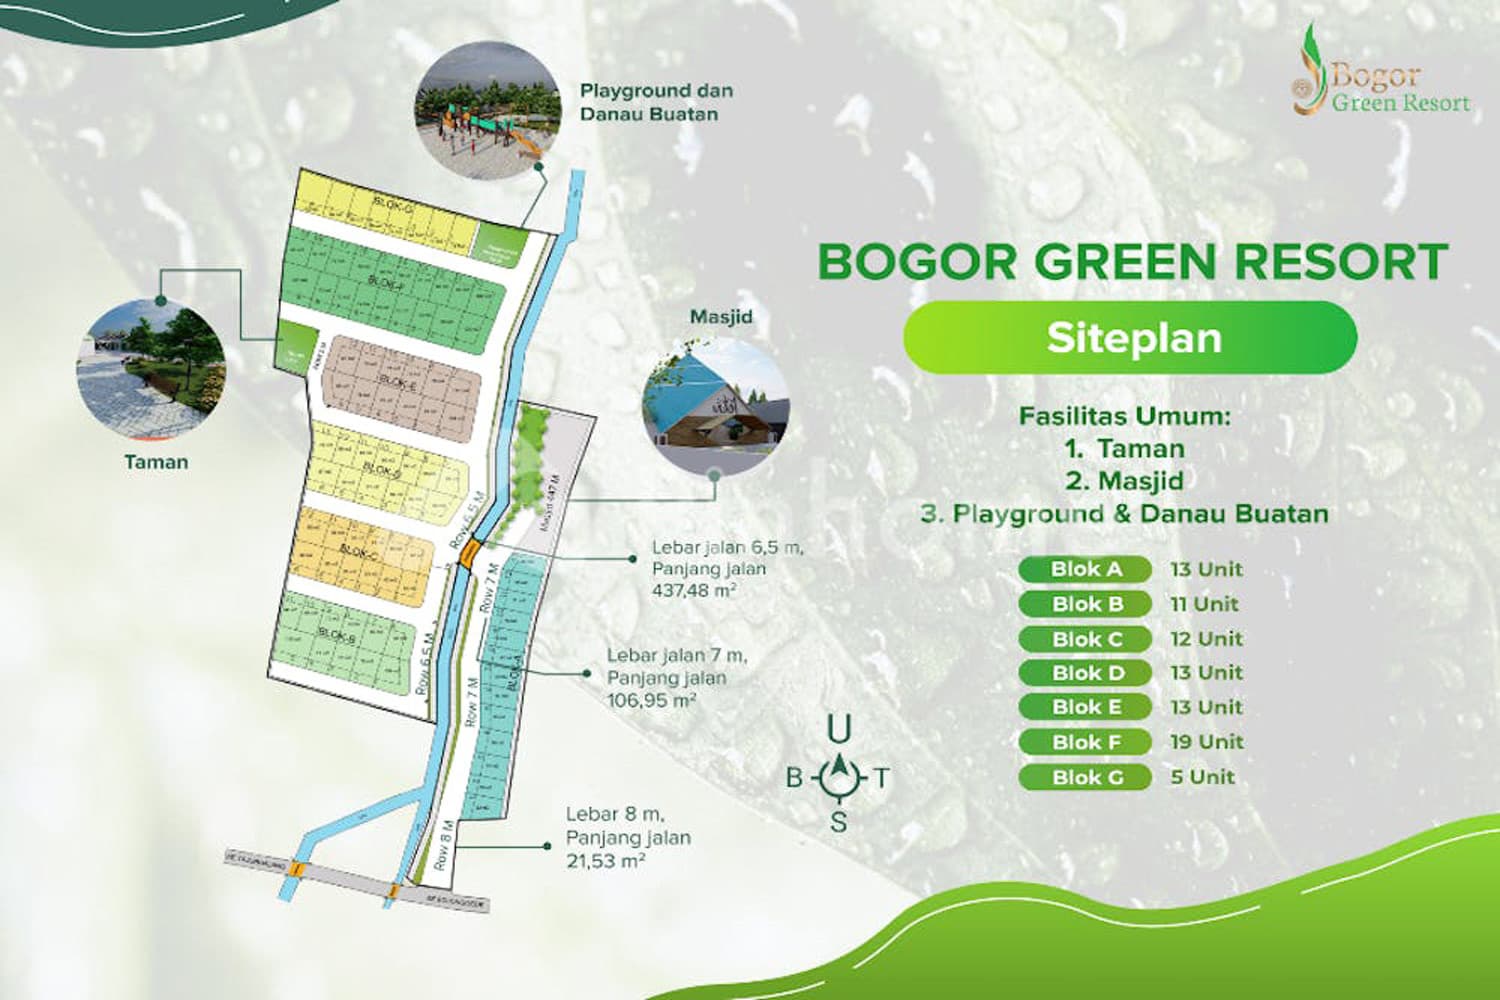 Siteplan Bogor Green Resort